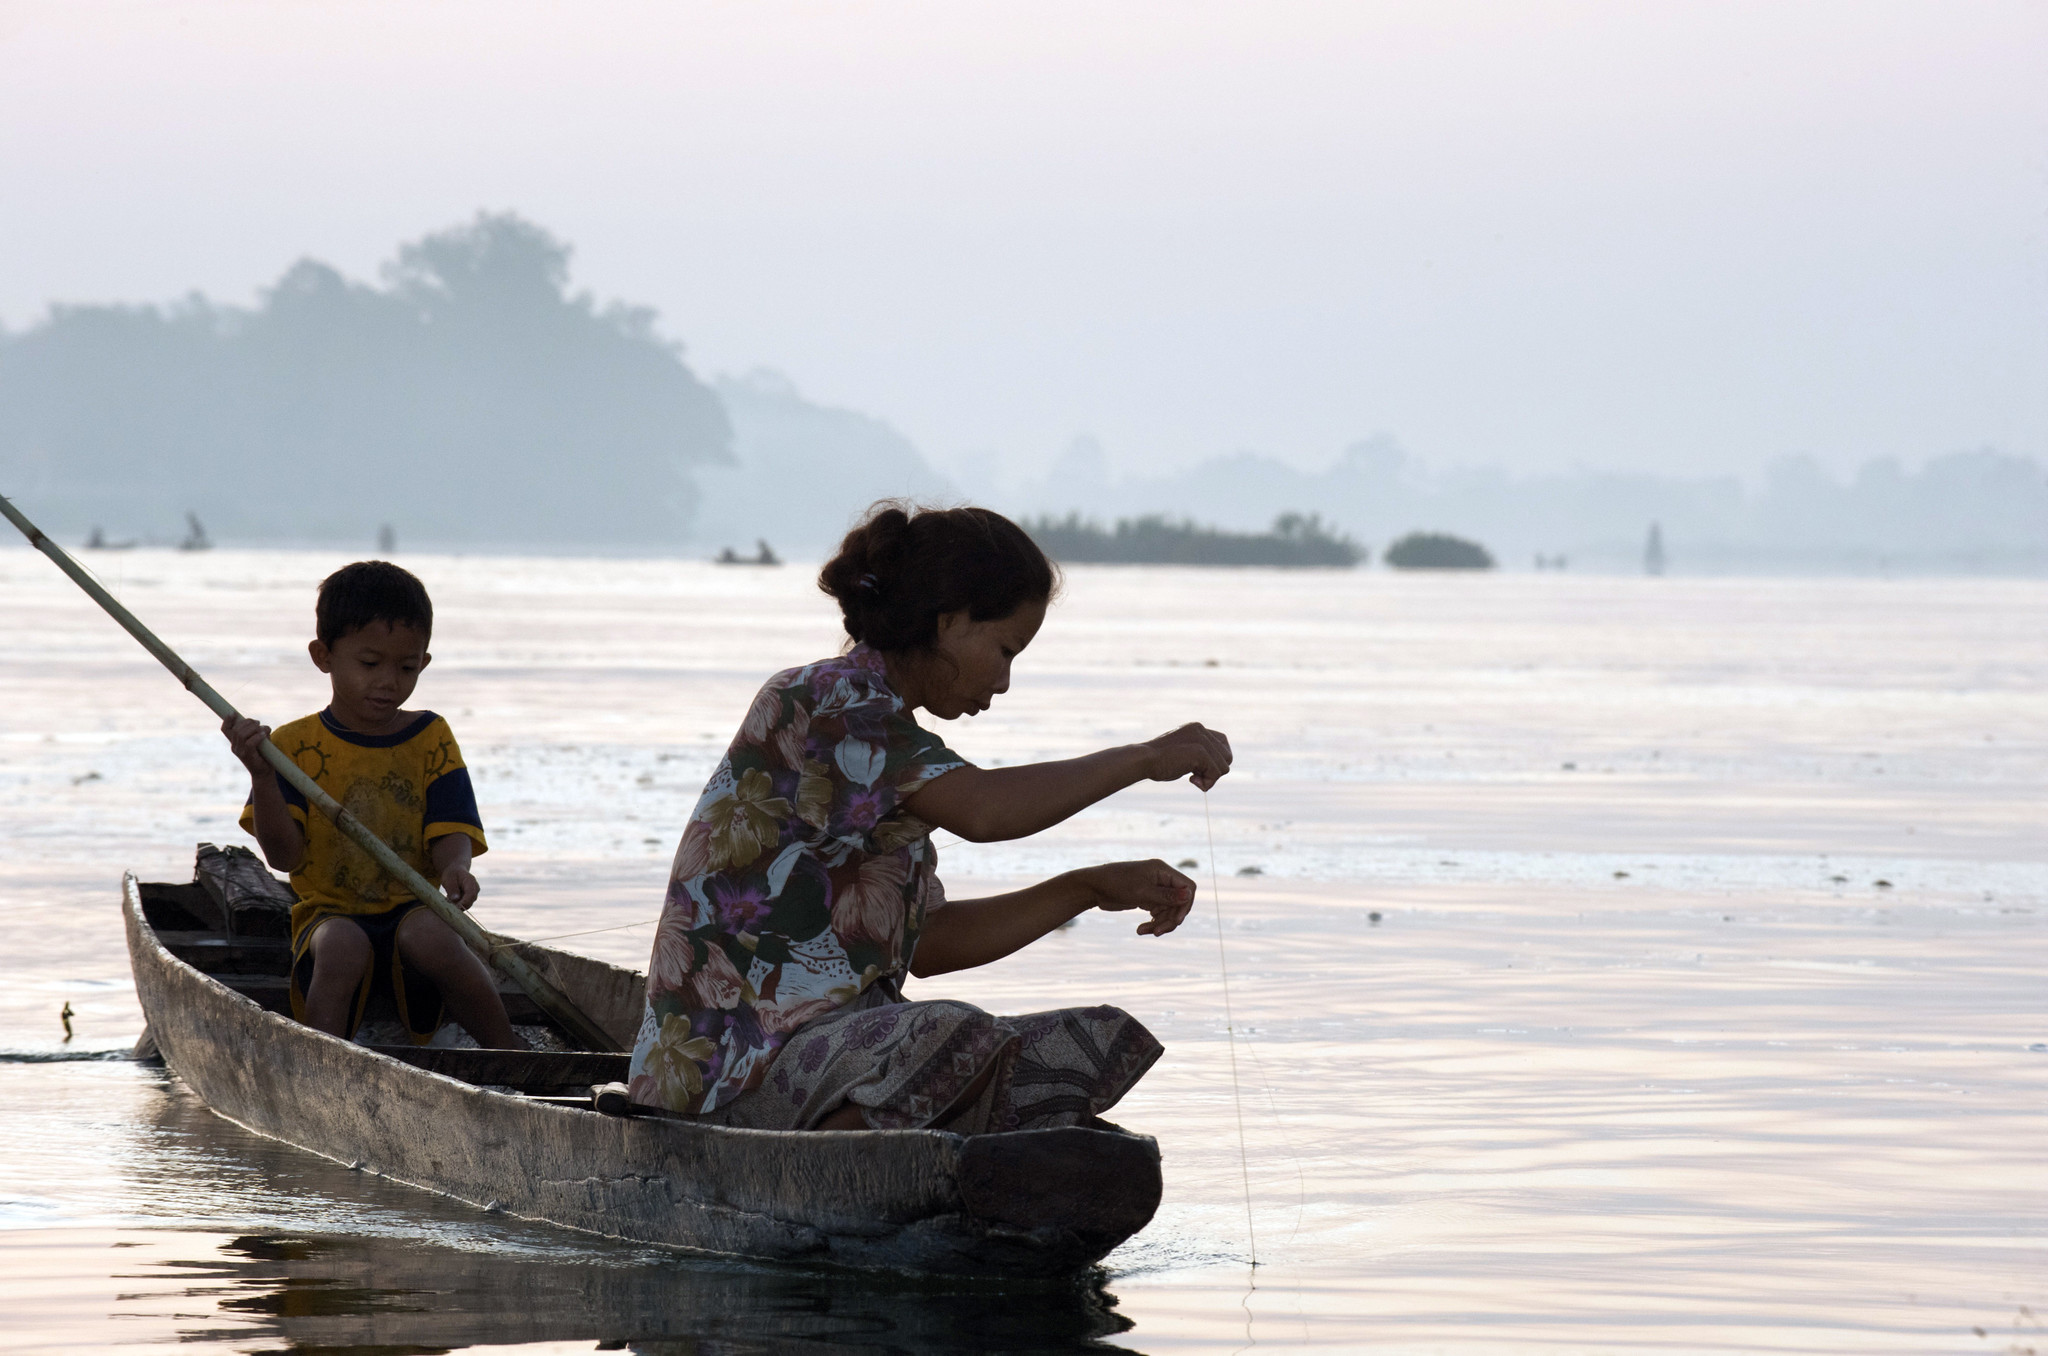 A fisherwoman checks her fishing line in the Mekong River in Laos. Photo by Patrick Dugan.